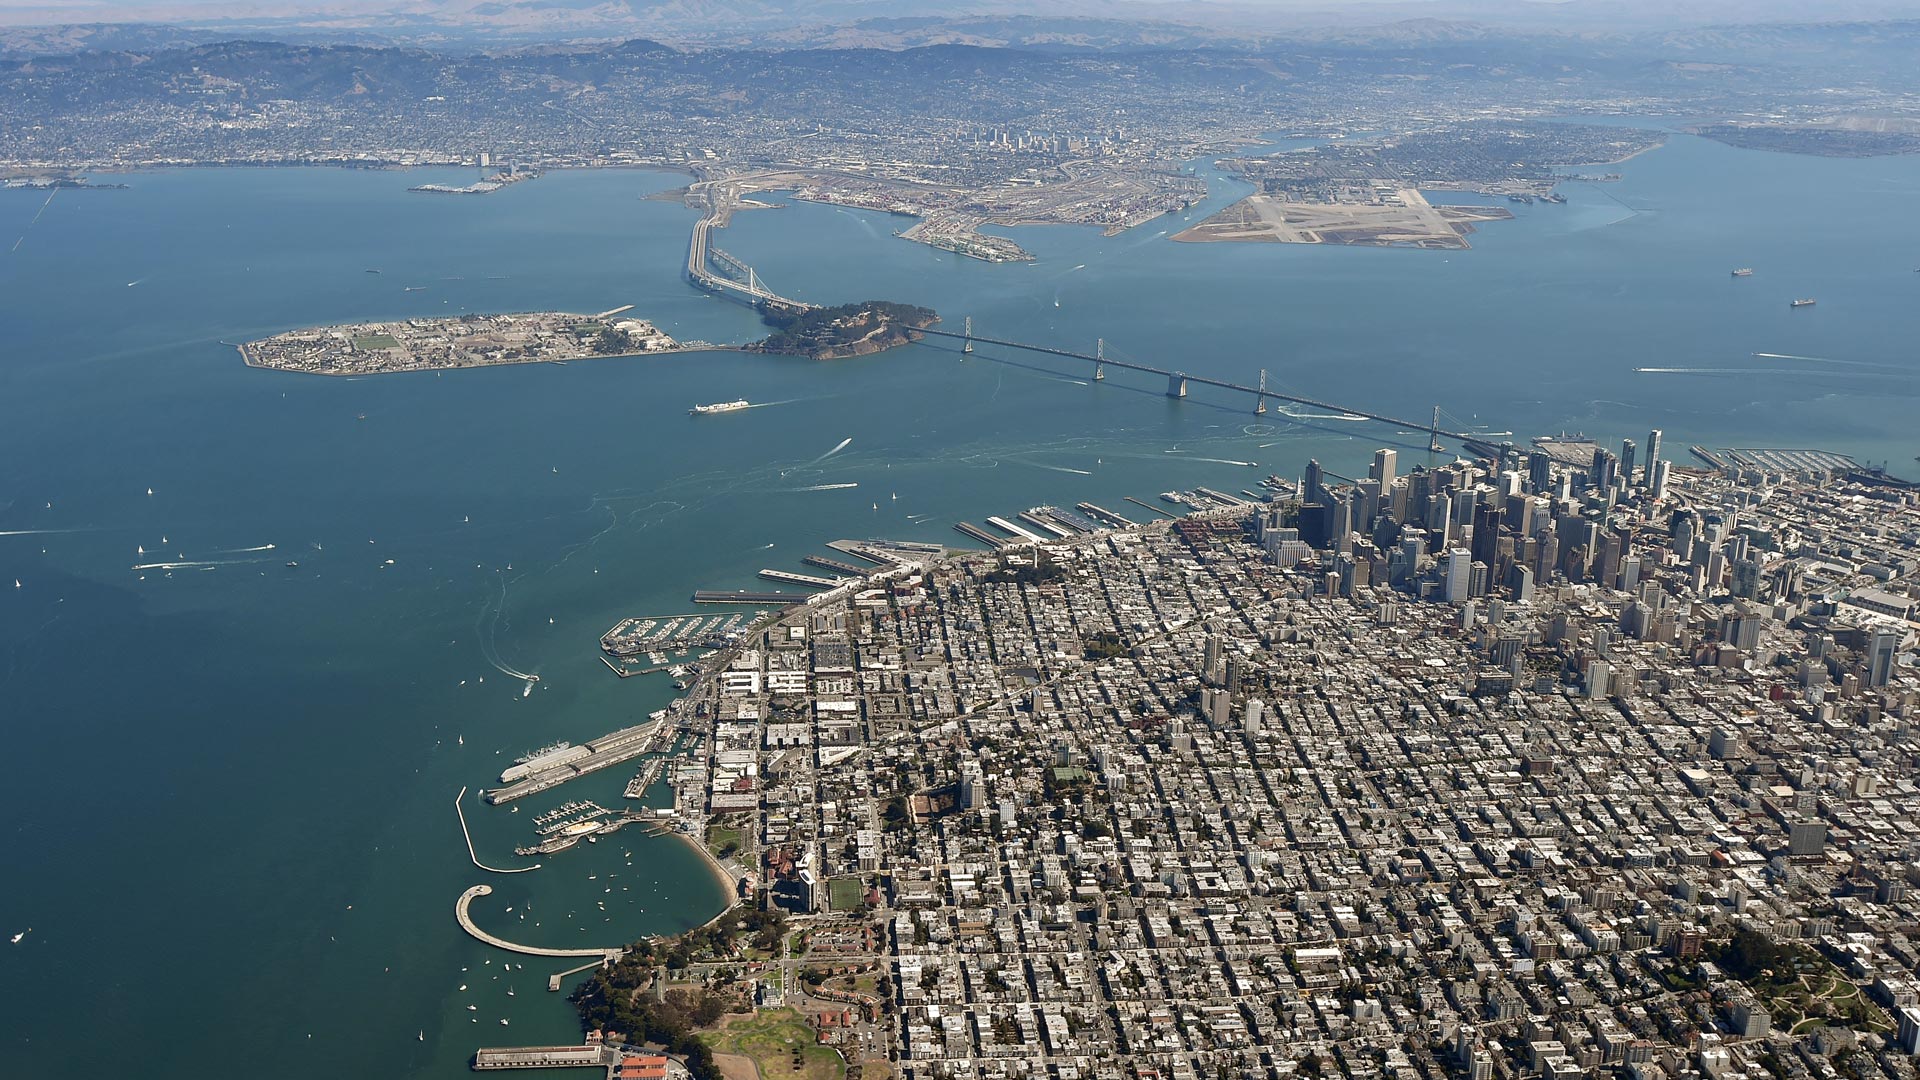 Carbon Capture Flops in California Despite Millions in Investment